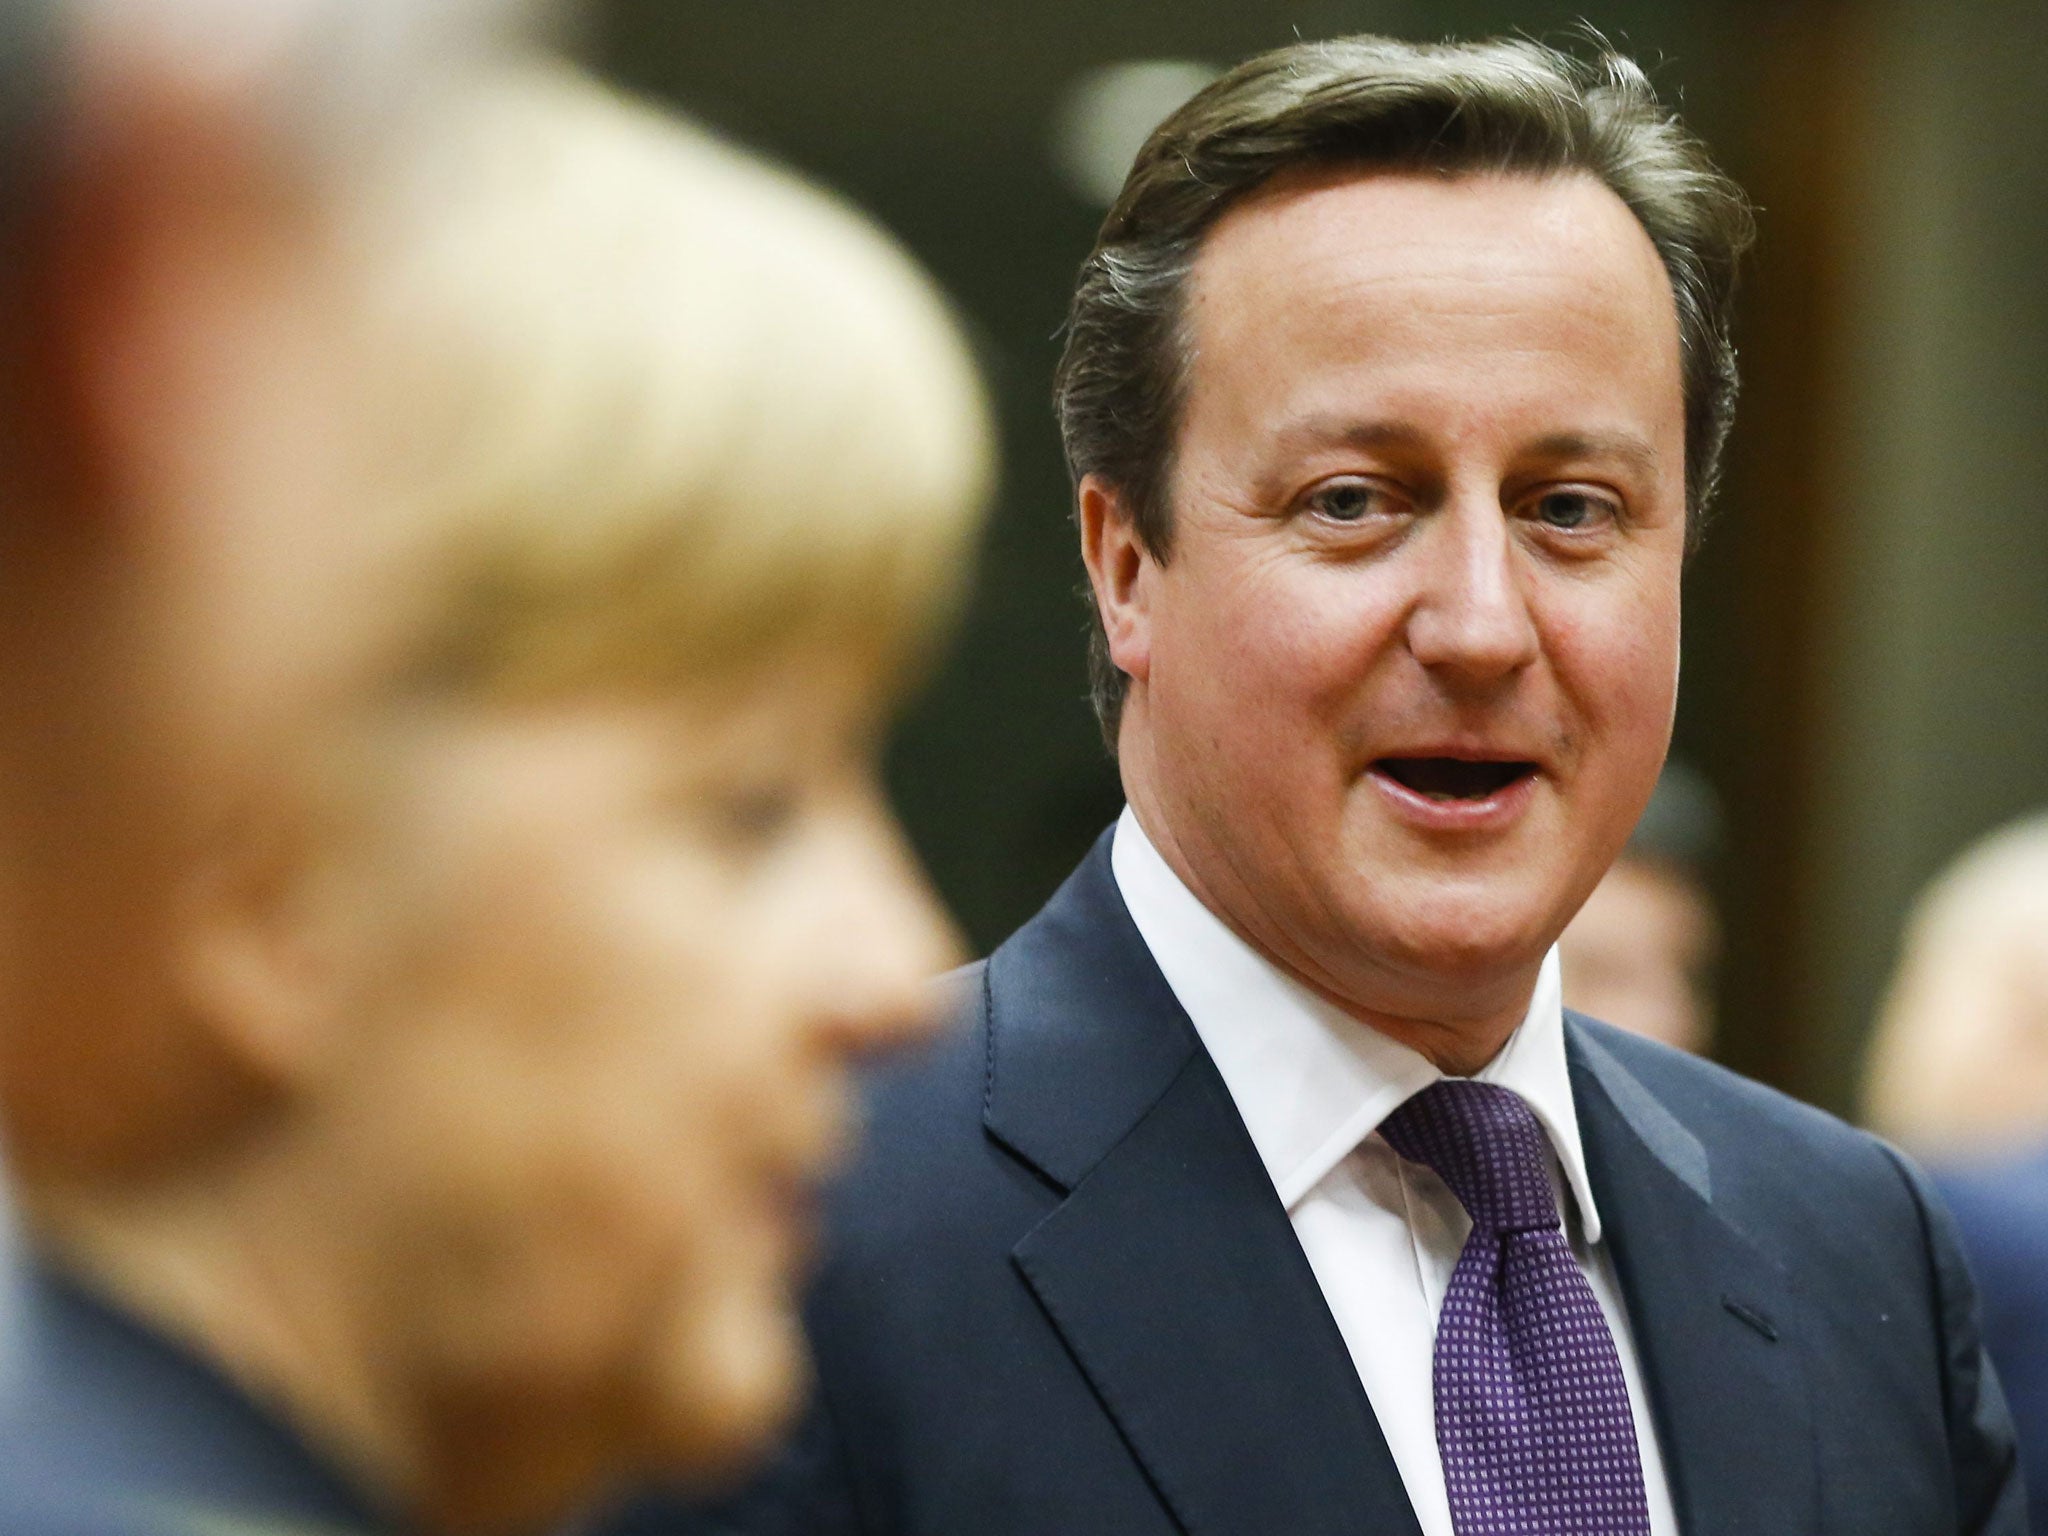 Cameron announced in January that he would seek to renegotiate the terms of Britain's EU membership